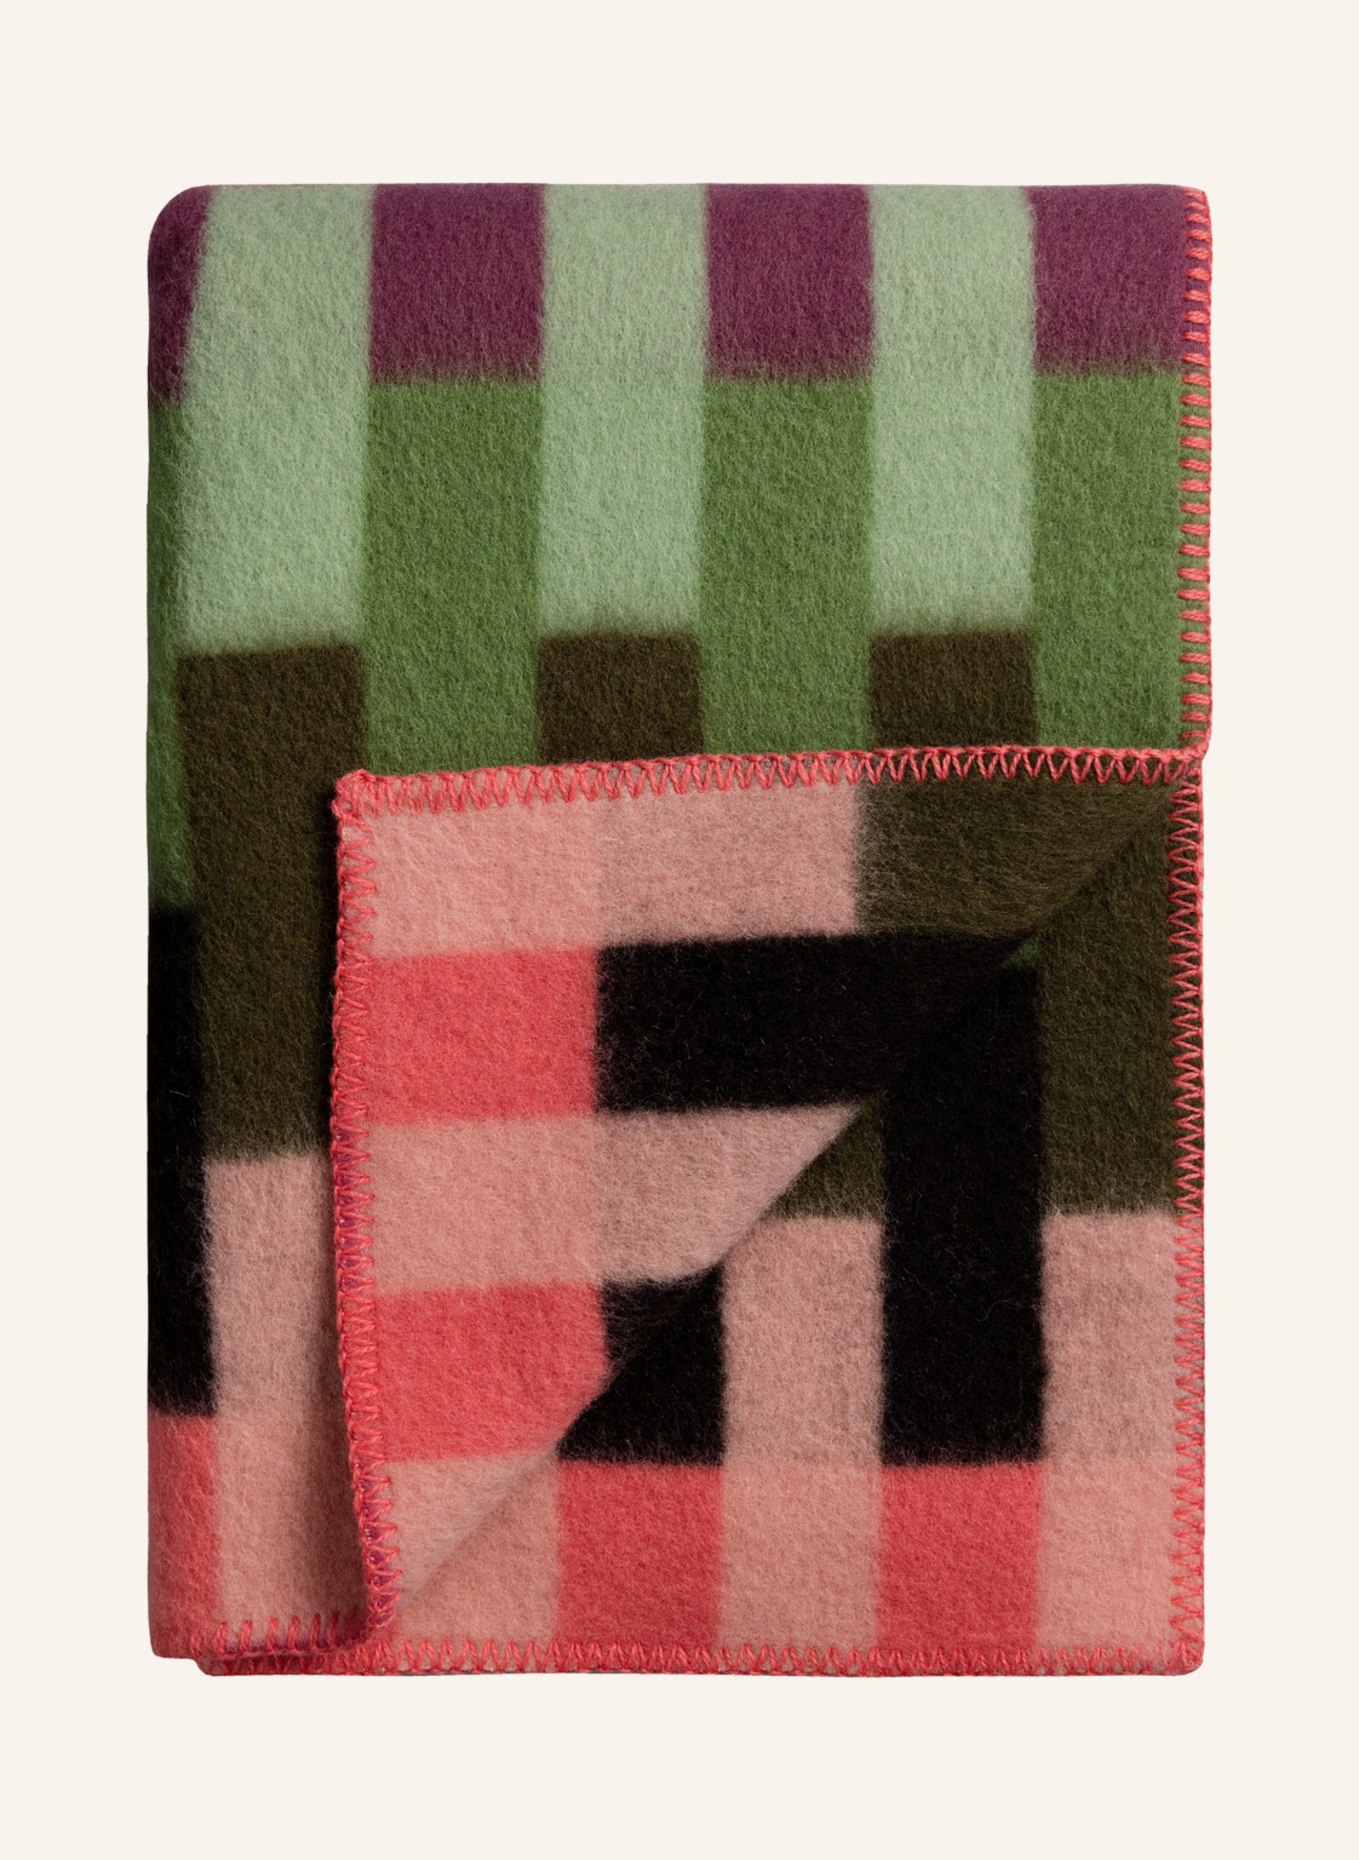 Røros Tweed Tweed-Plaid ÅSMUND, Farbe: SCHWARZ/ GRÜN/ ROSA (Bild 1)